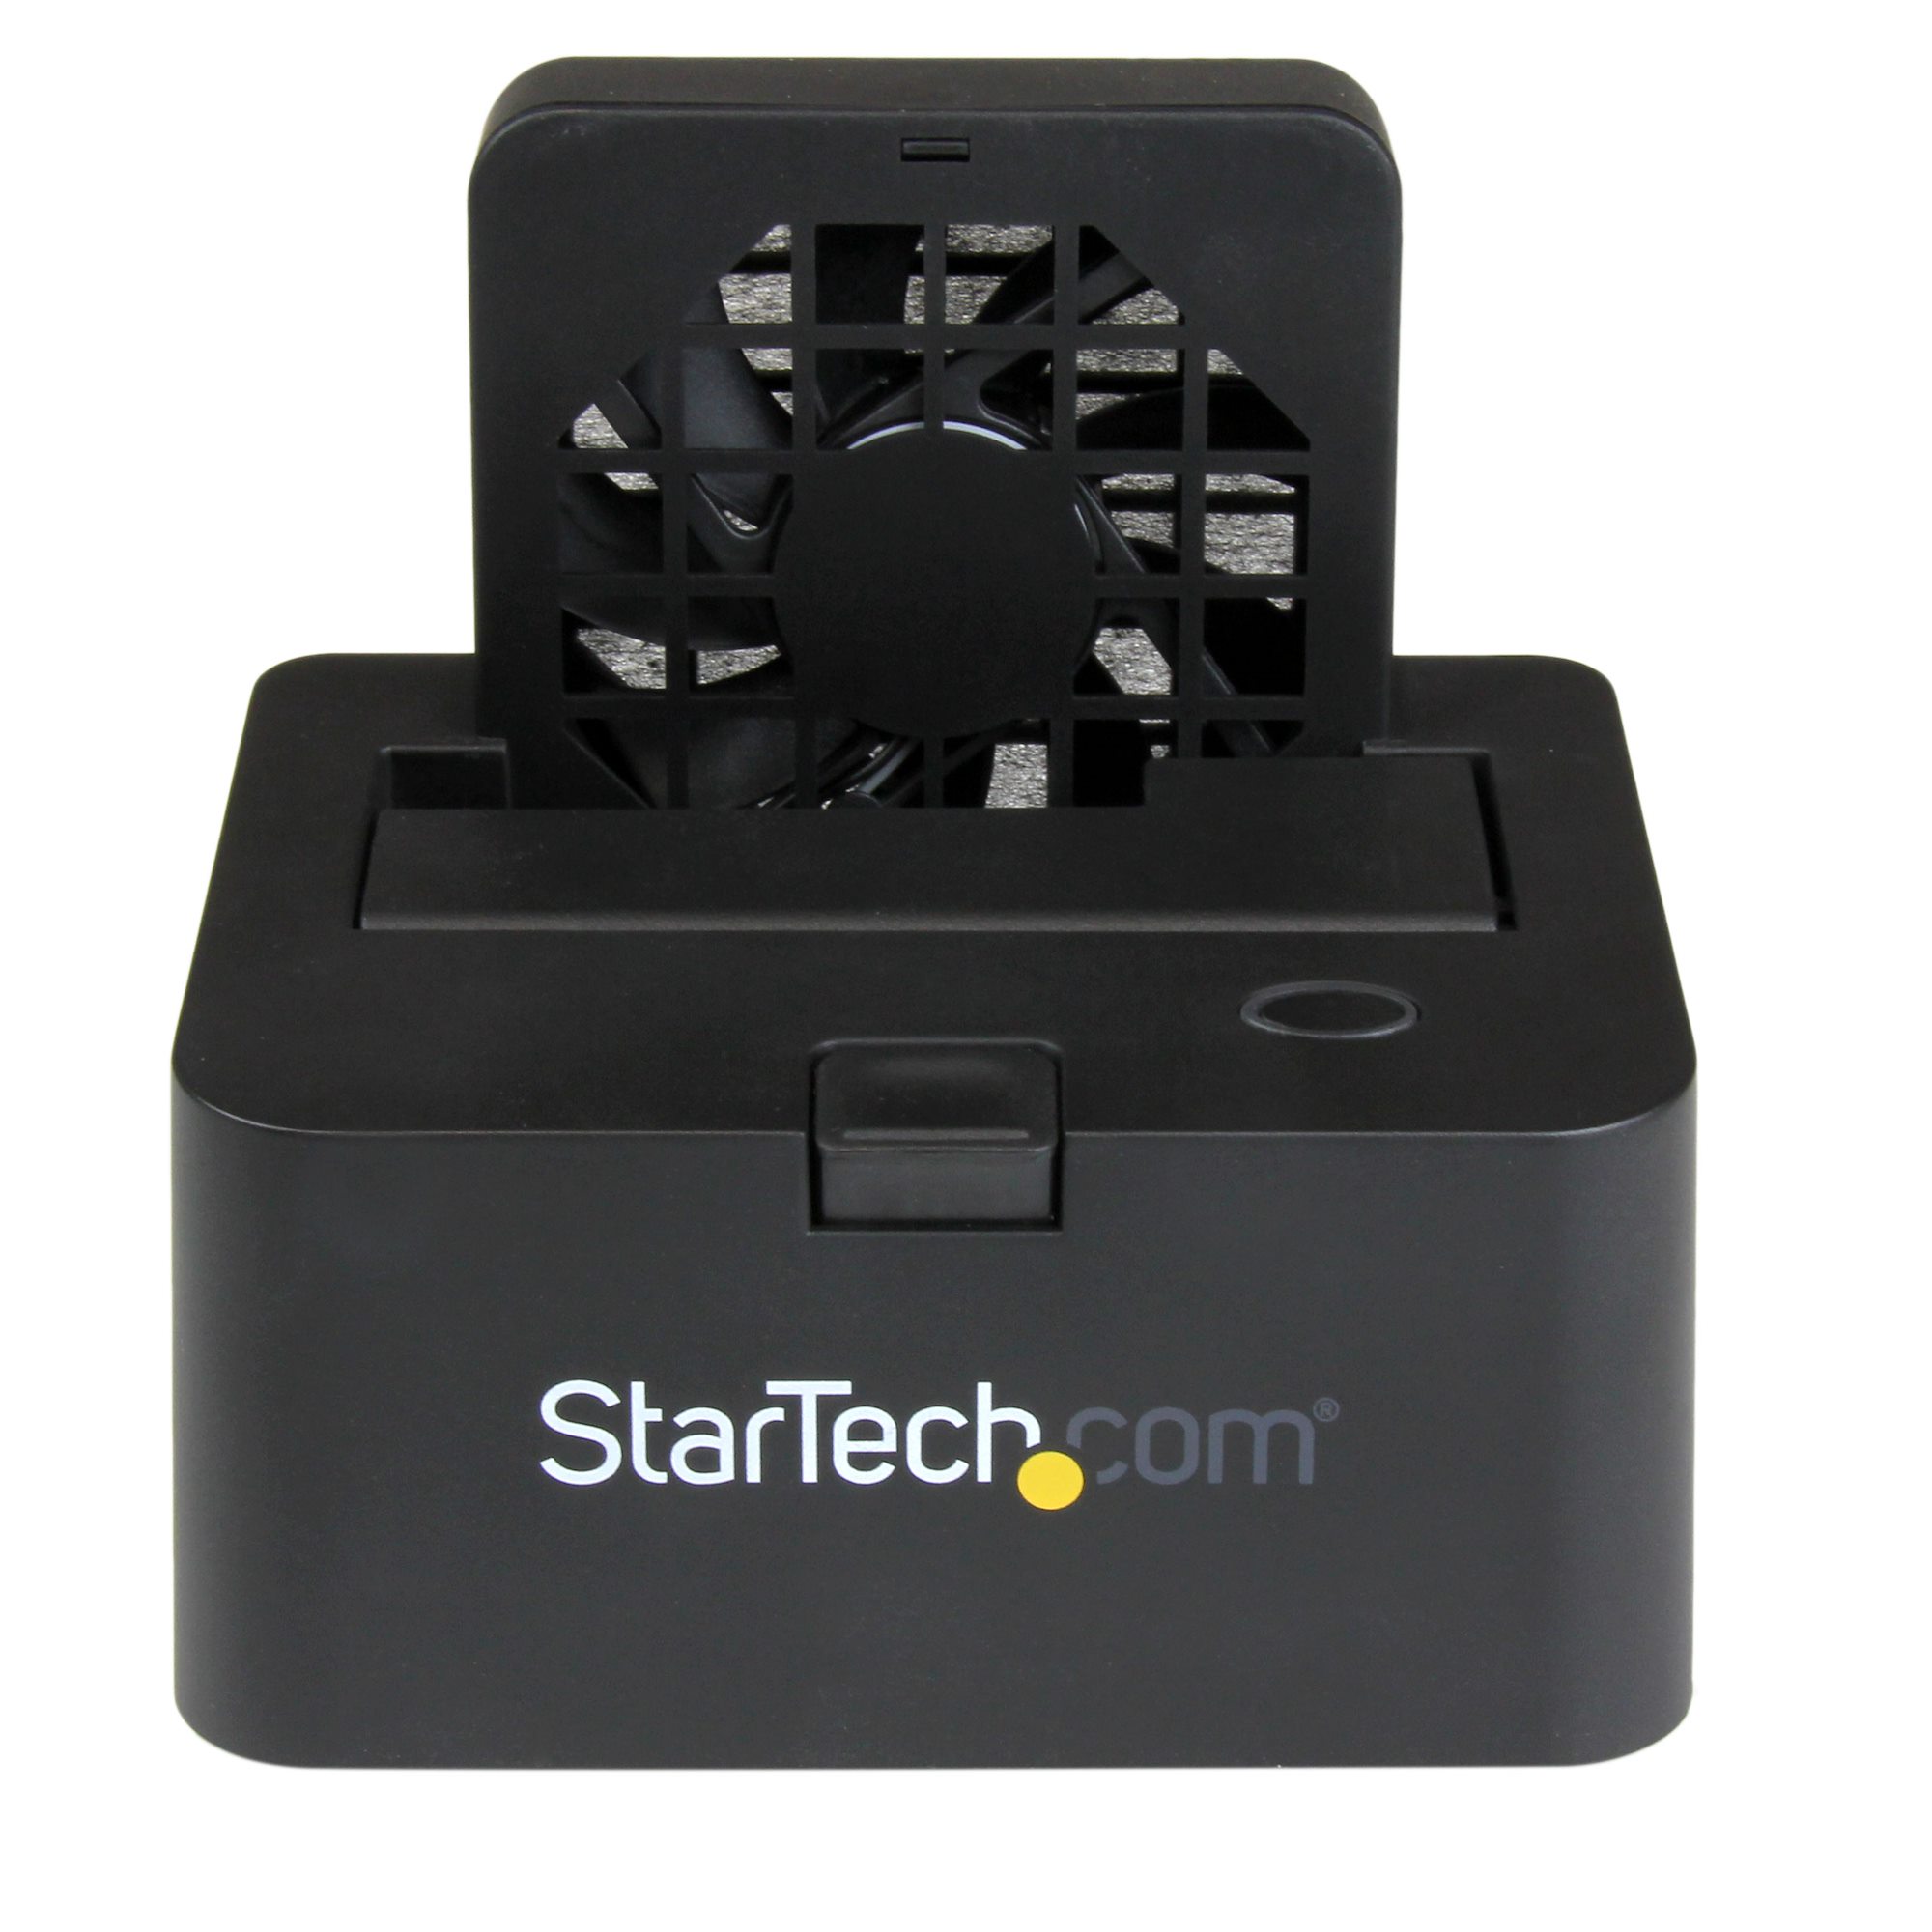 eSATA or USB 3.0 hard drive w/ HDD Docking Stations | StarTech.com